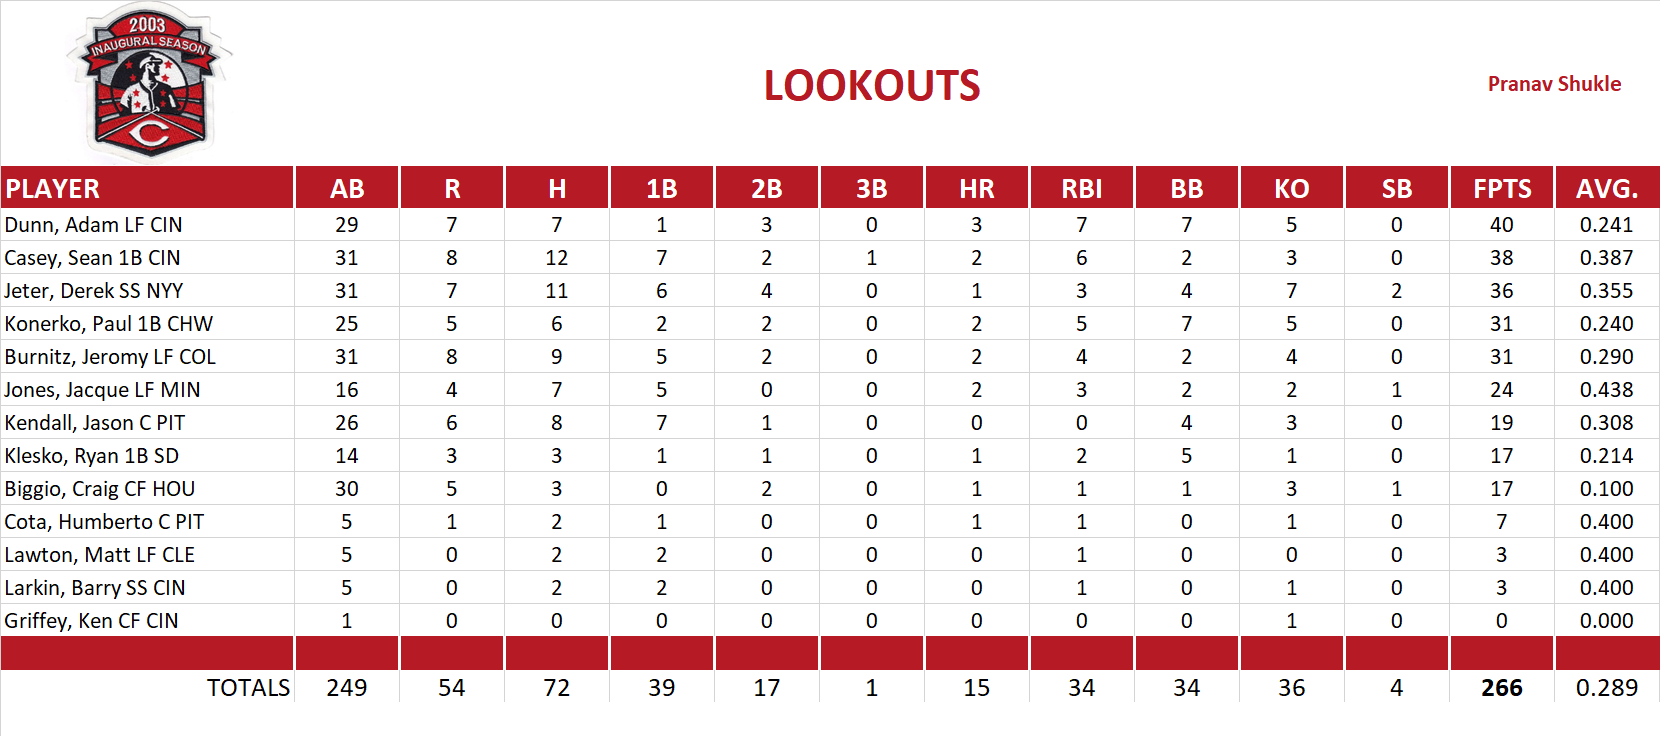 2004 Major League Baseball Pool Playoff Team Stats